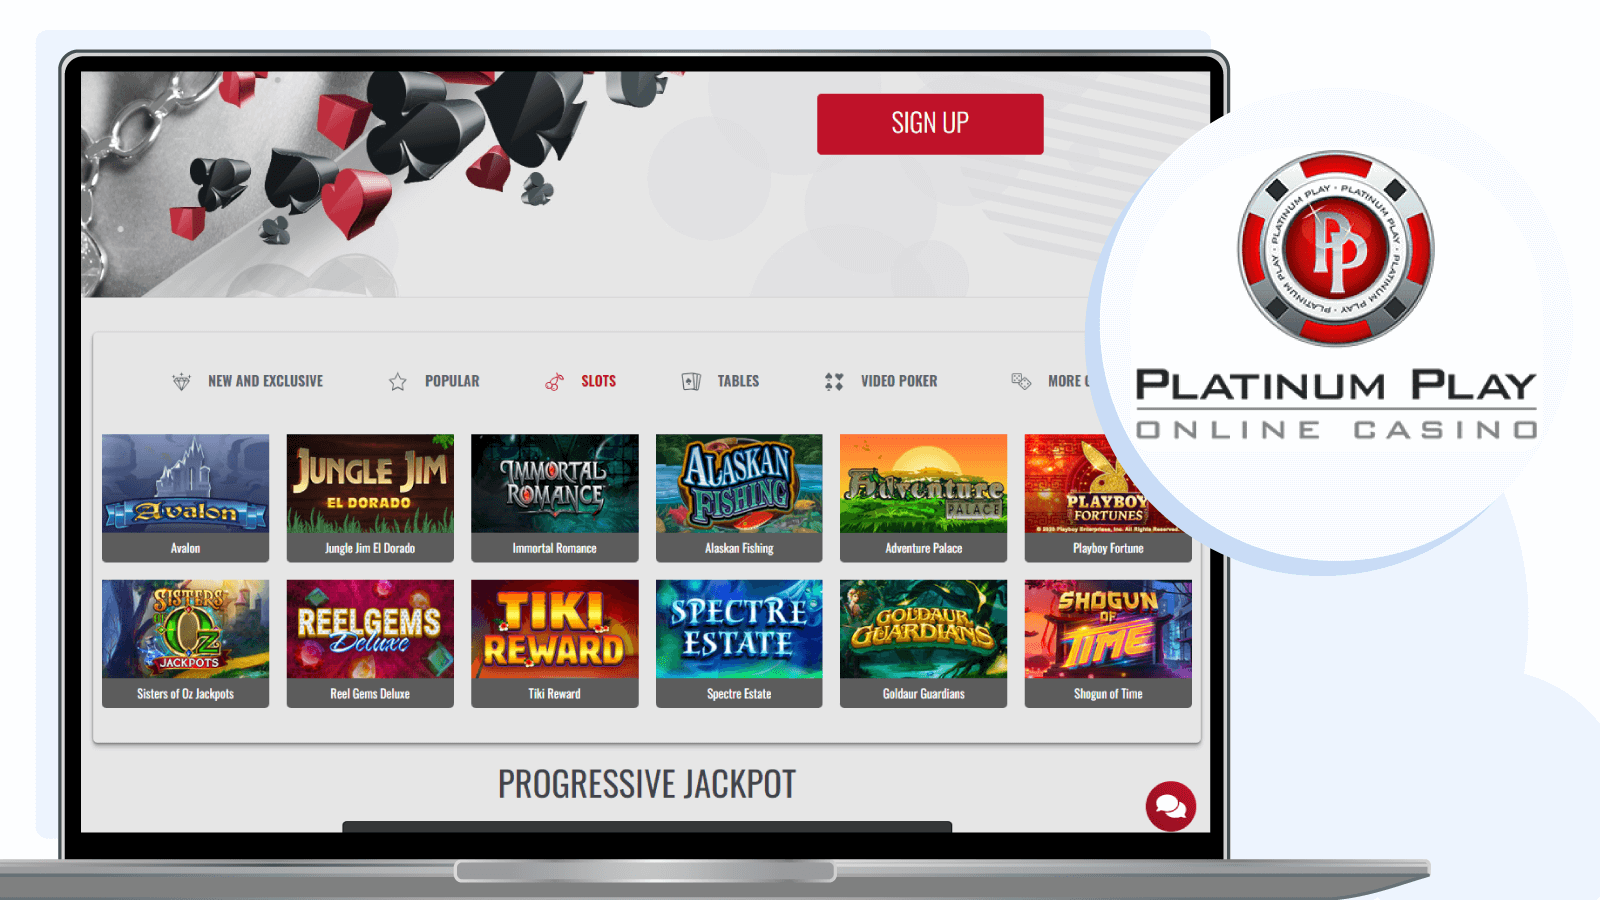 Platinum Play casino slot games slection